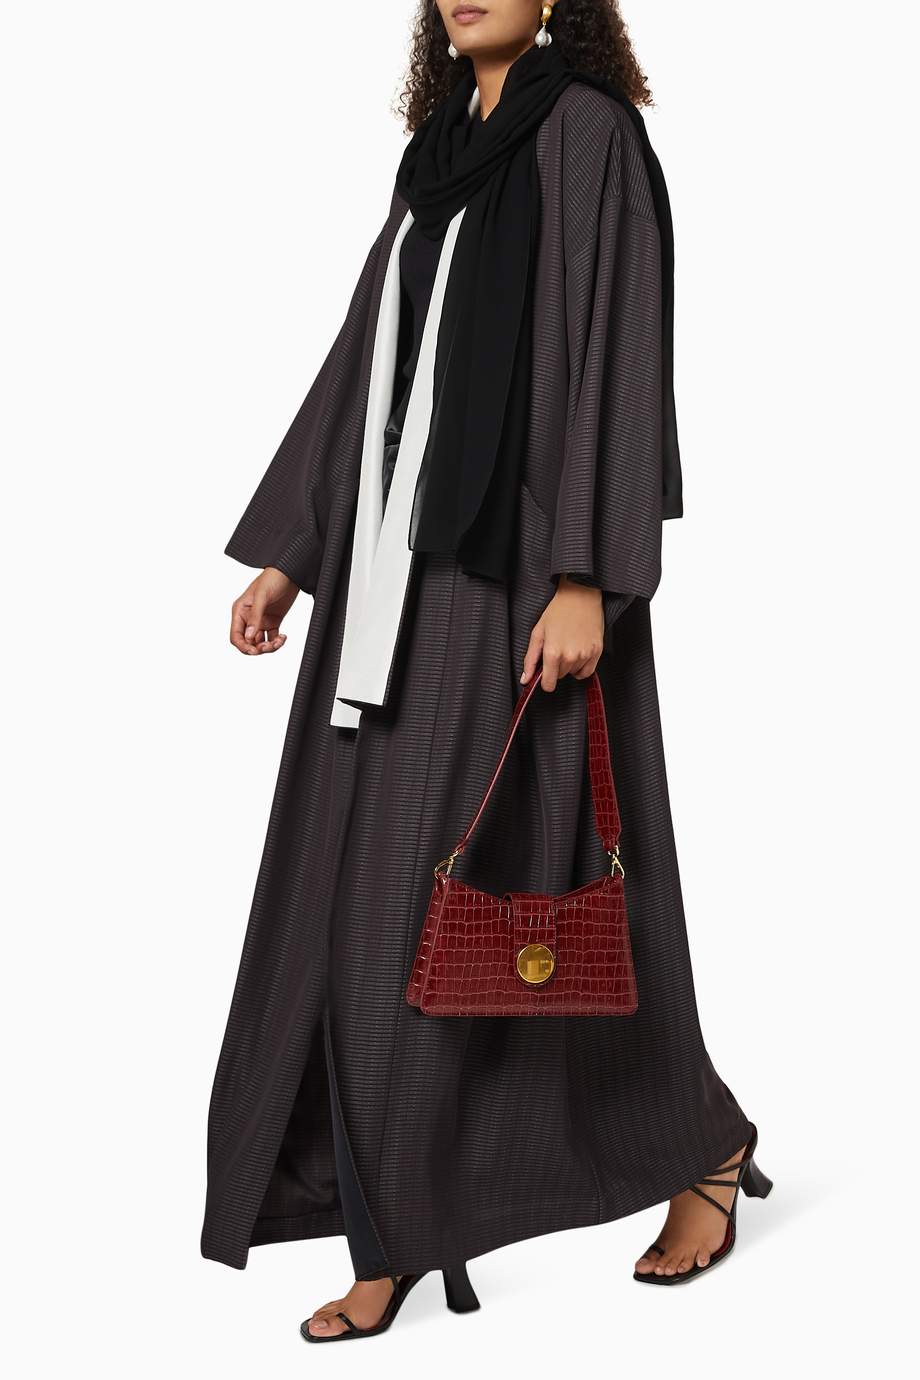 Shop CHI-KA Black Checkered Kimono Abaya for Women | Ounass UAE